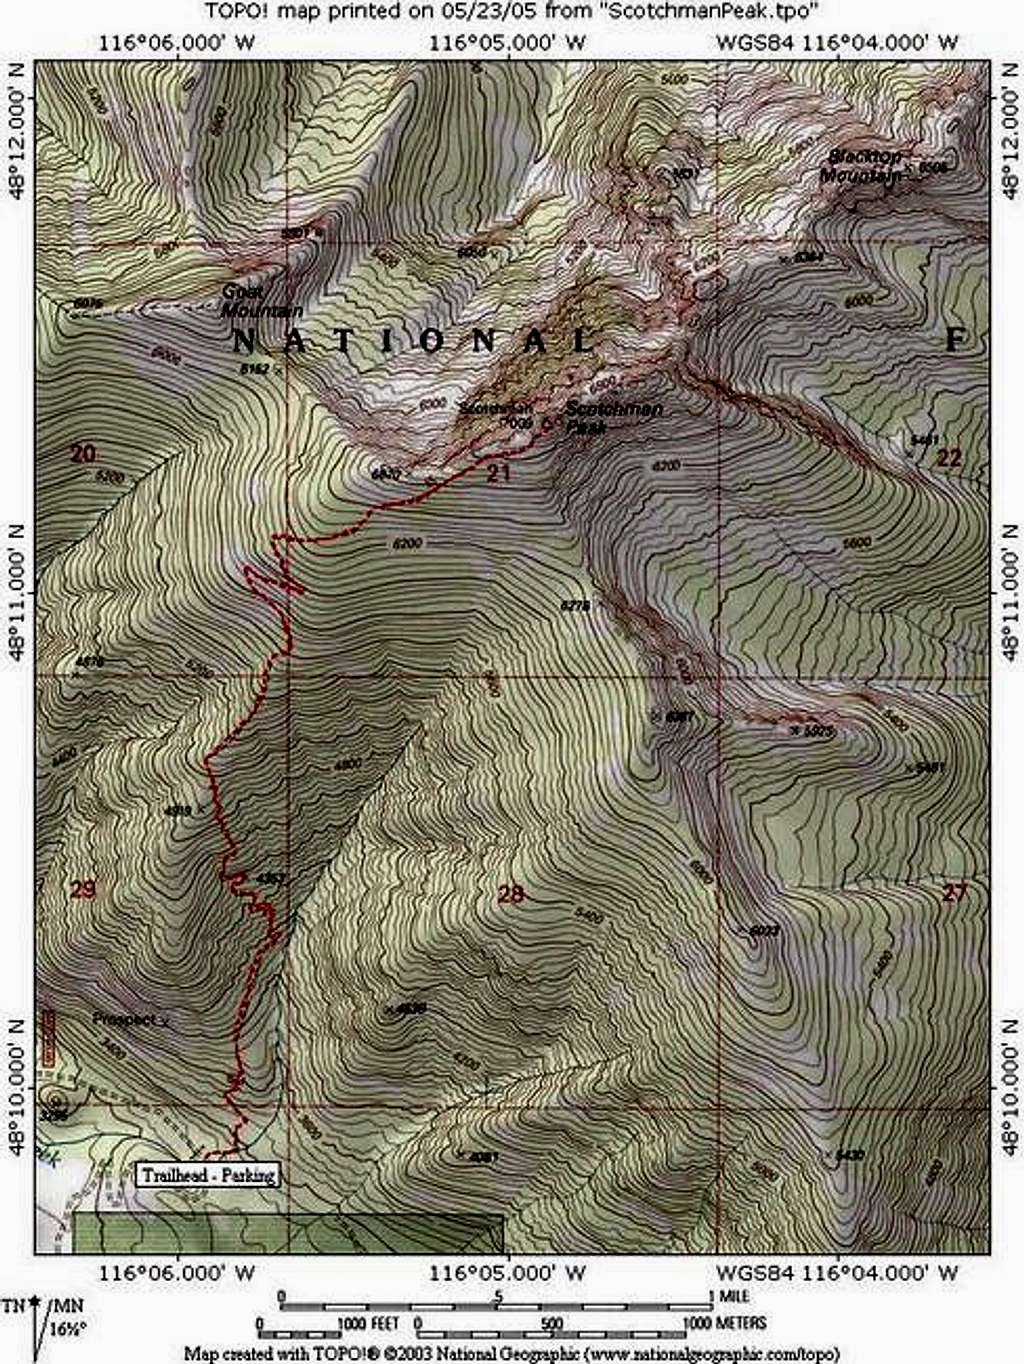 Scotchman Peak Trail 65 is...